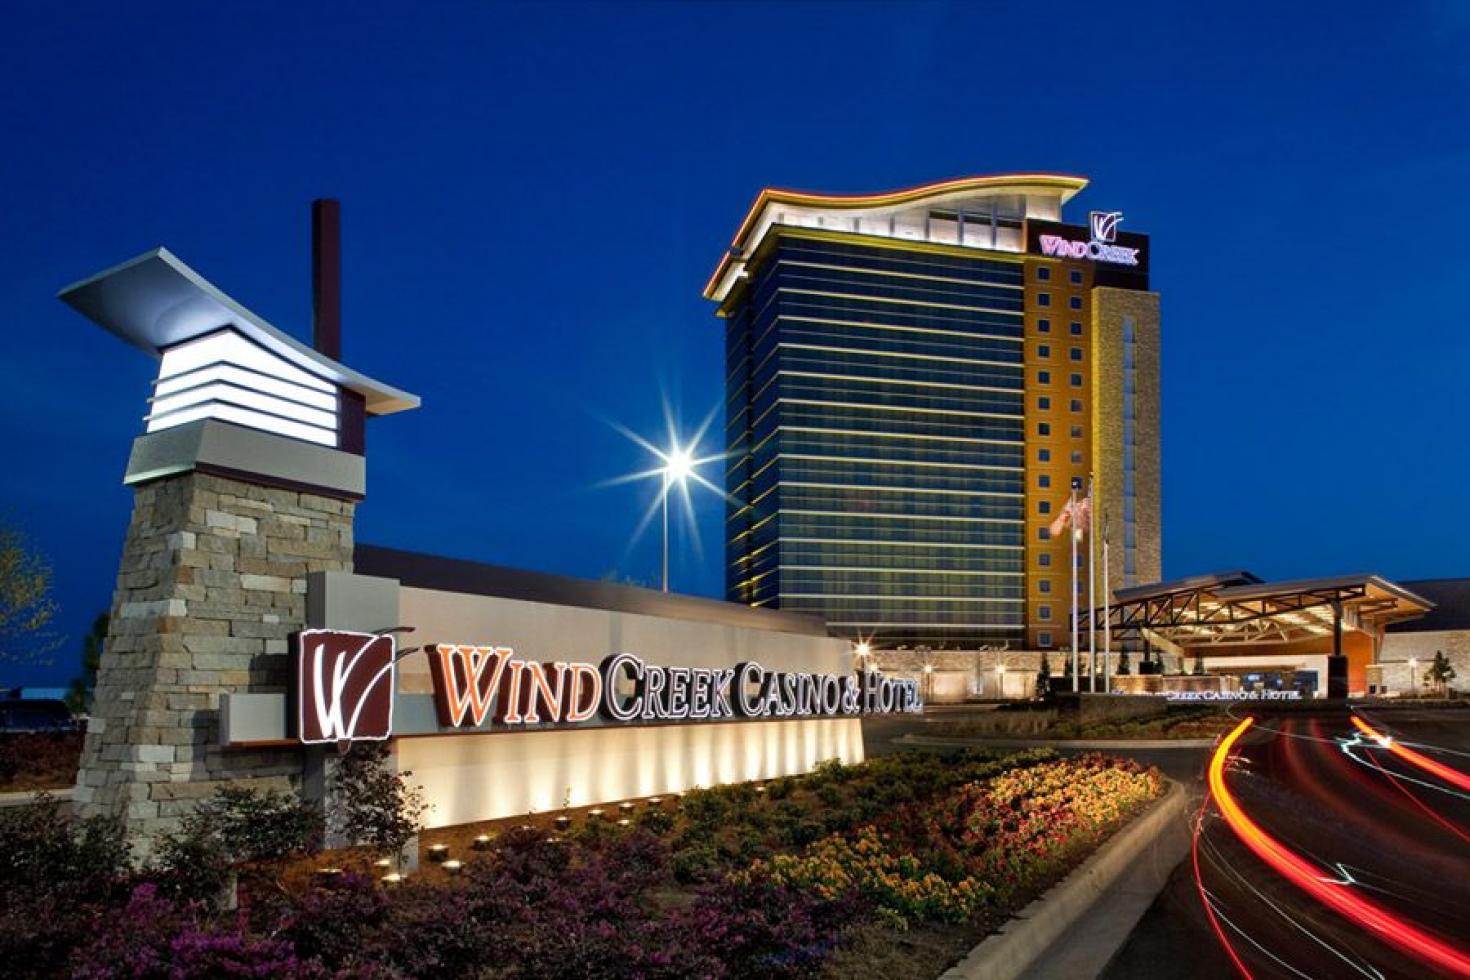 The Wind Creek Casino Montgomery